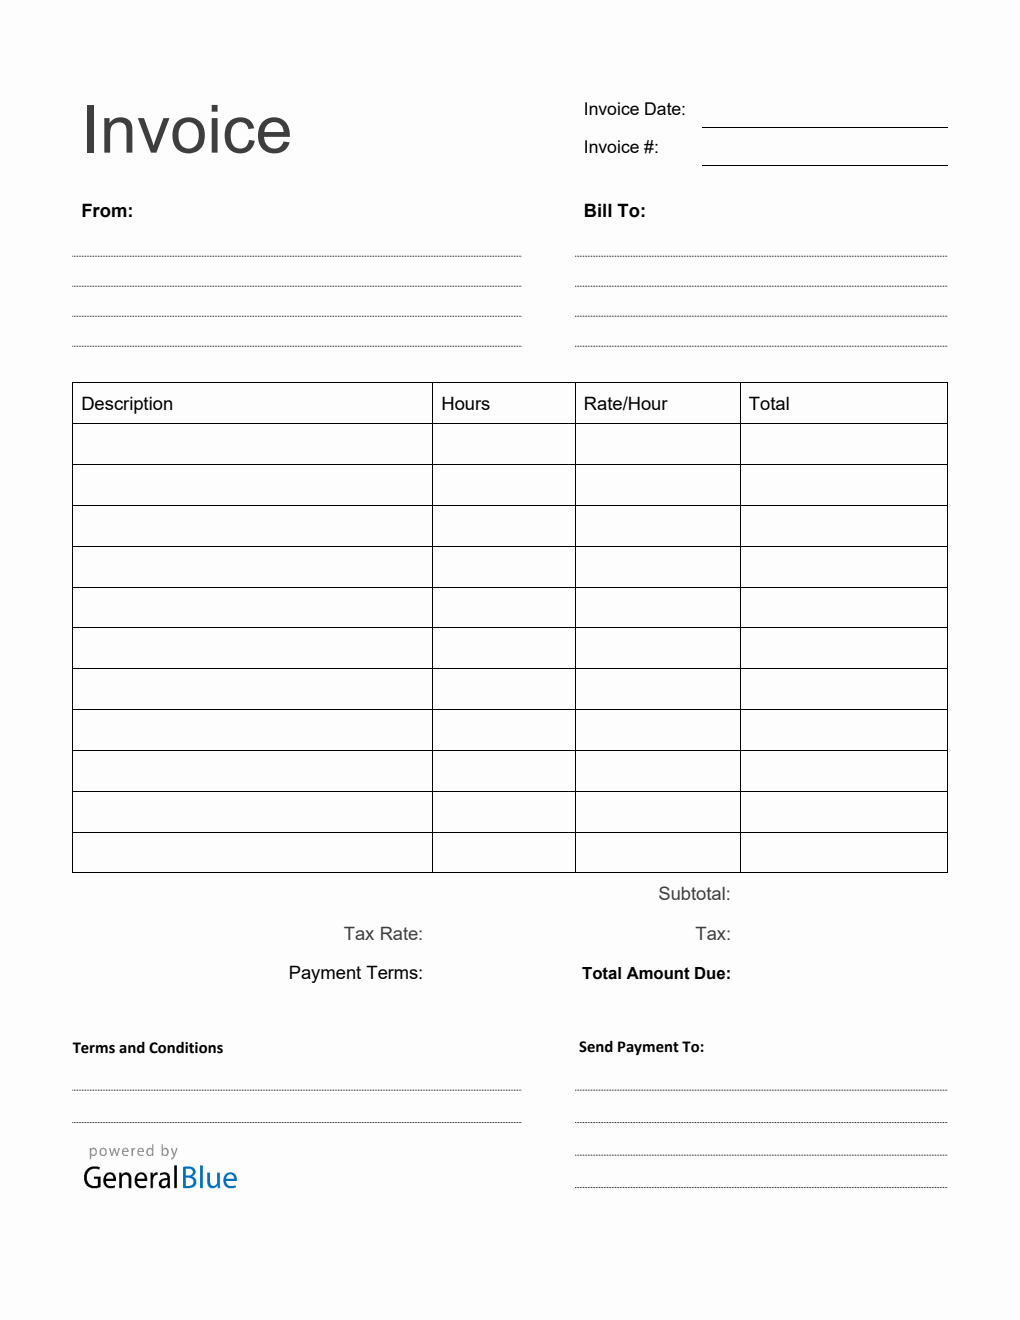 invoice-template-printable-invoice-business-form-editable-printable